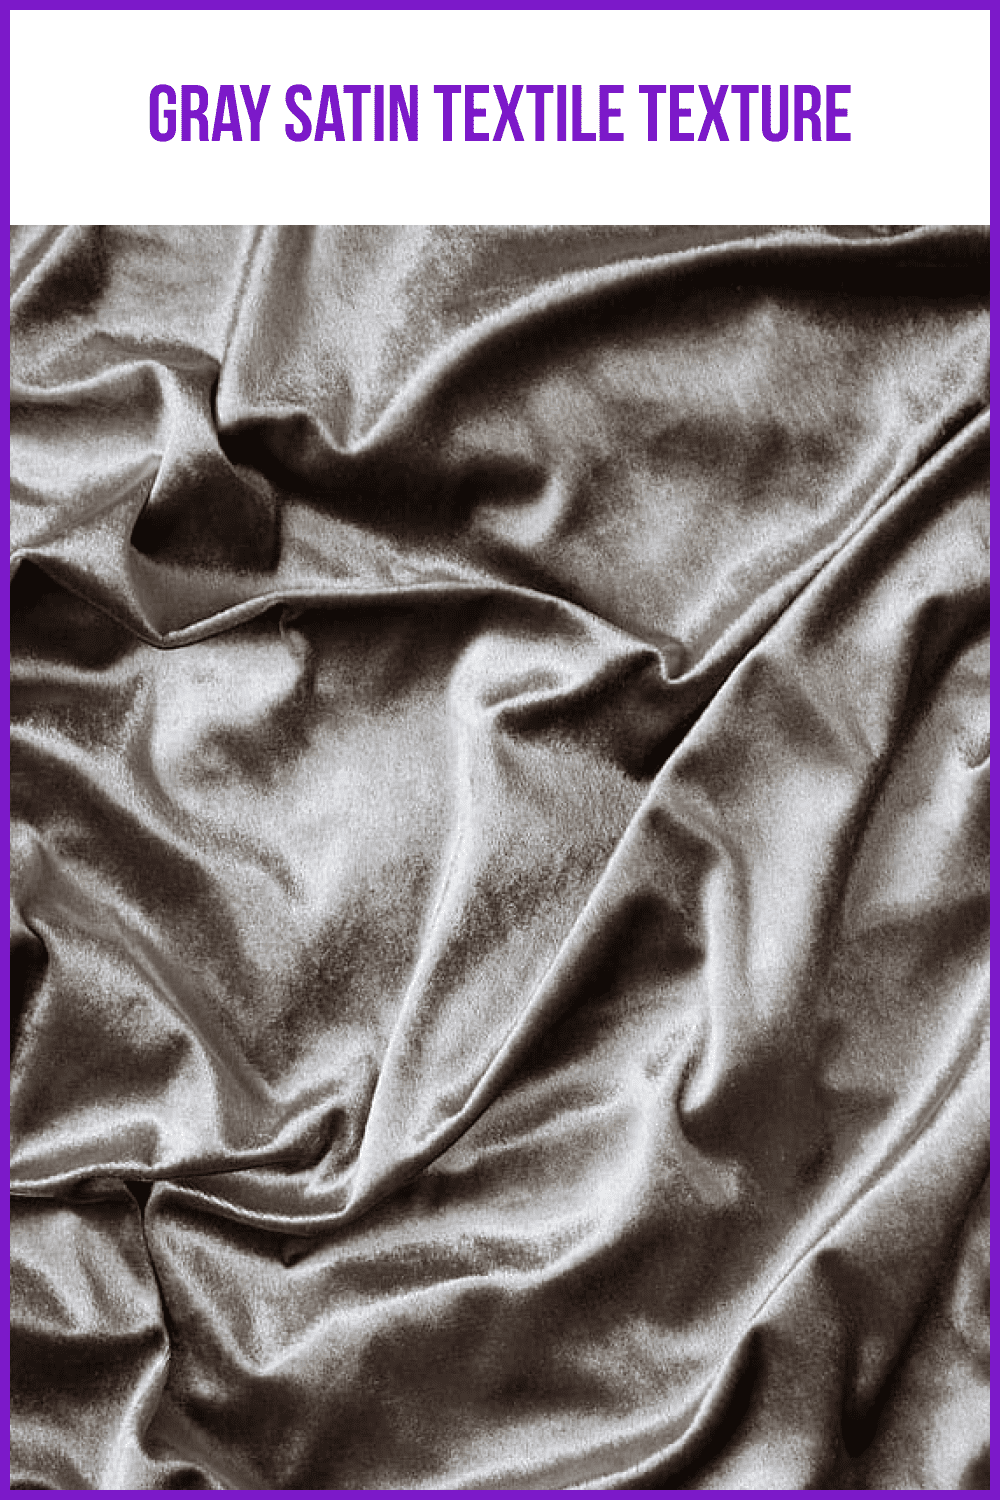 Gray Satin Textile Texture.